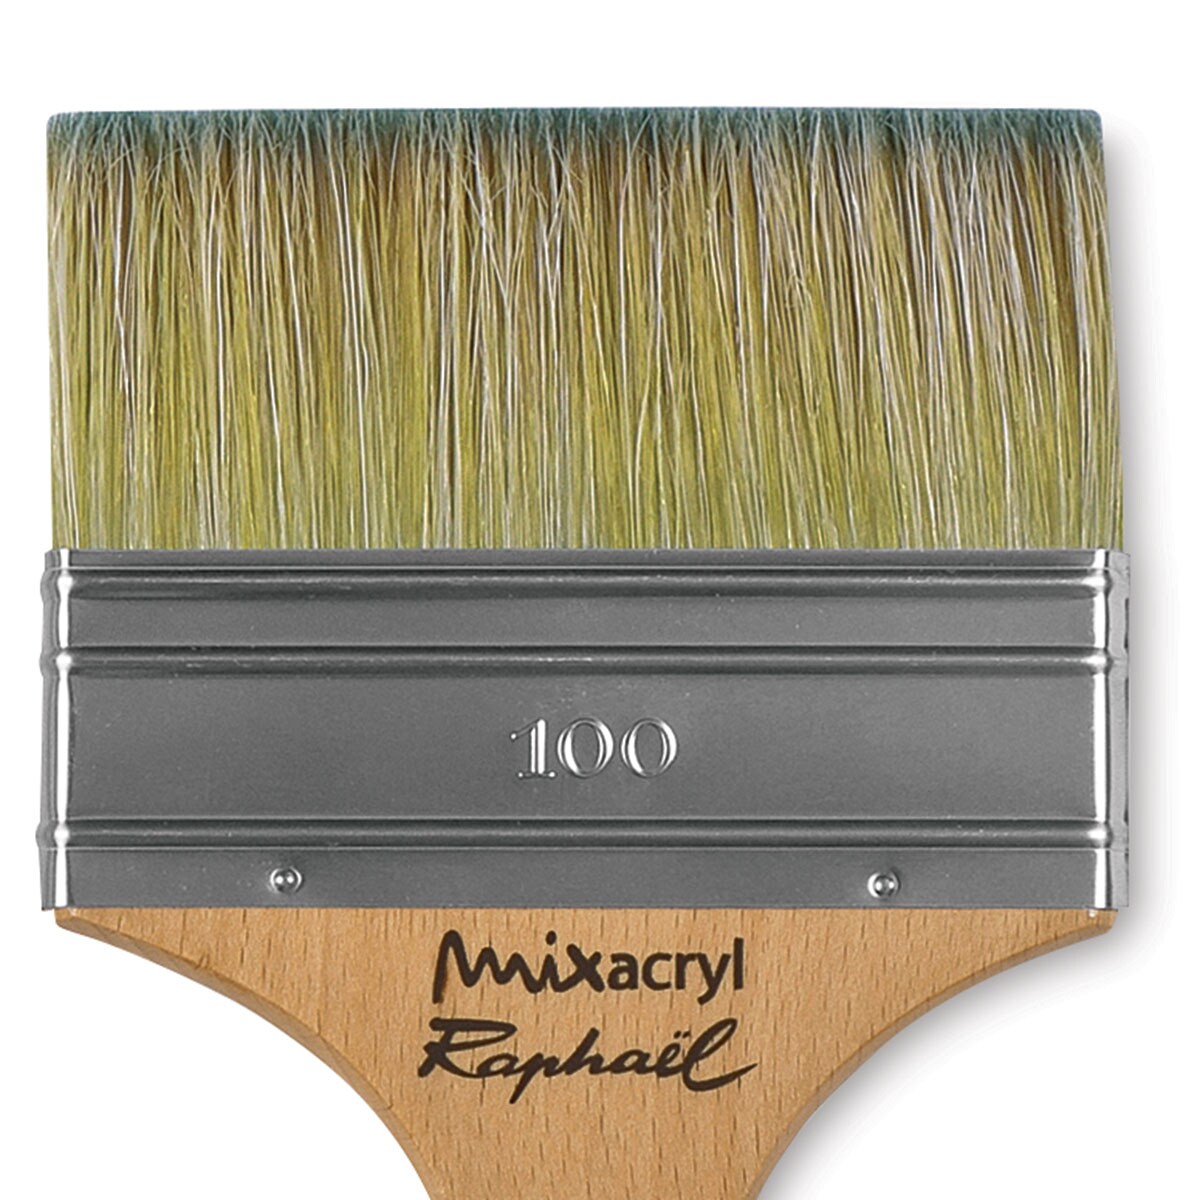 Raphael Mixacryl Natural Bristle/Synthetic Mix Brush - Mixed Media Flat, Size 100